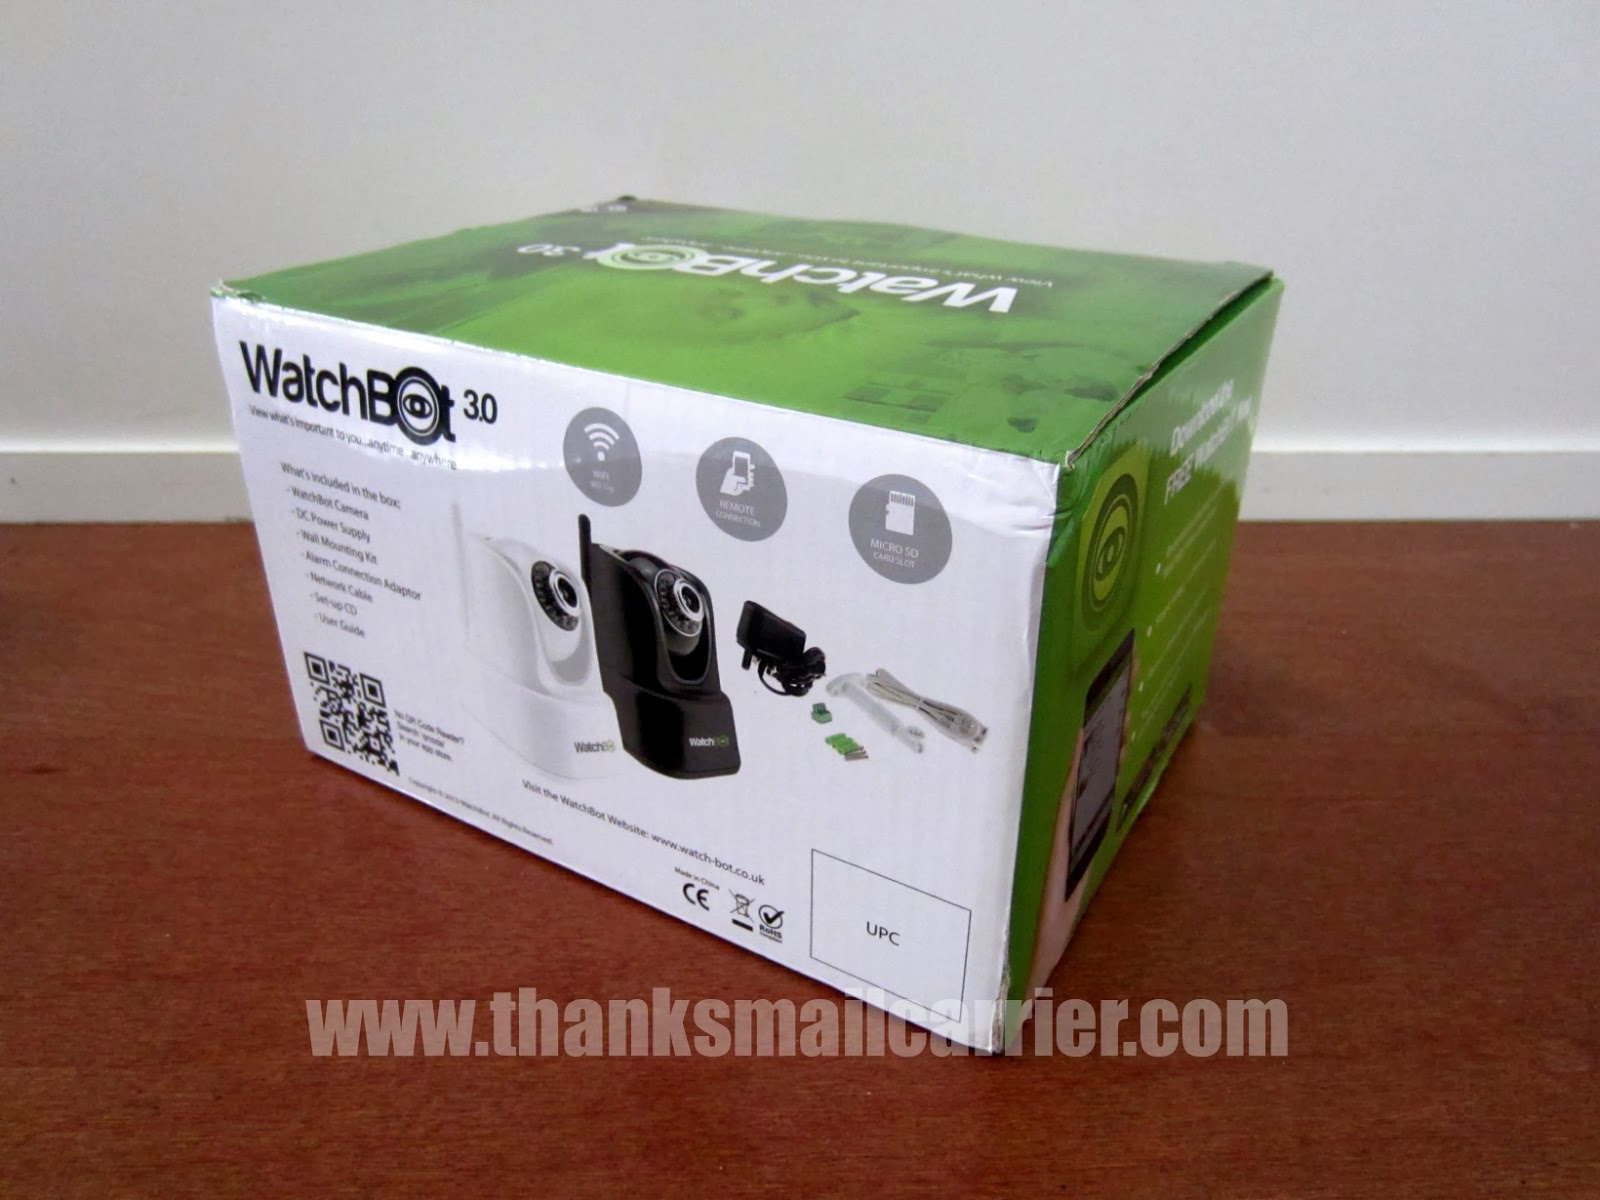 WatchBot security camera